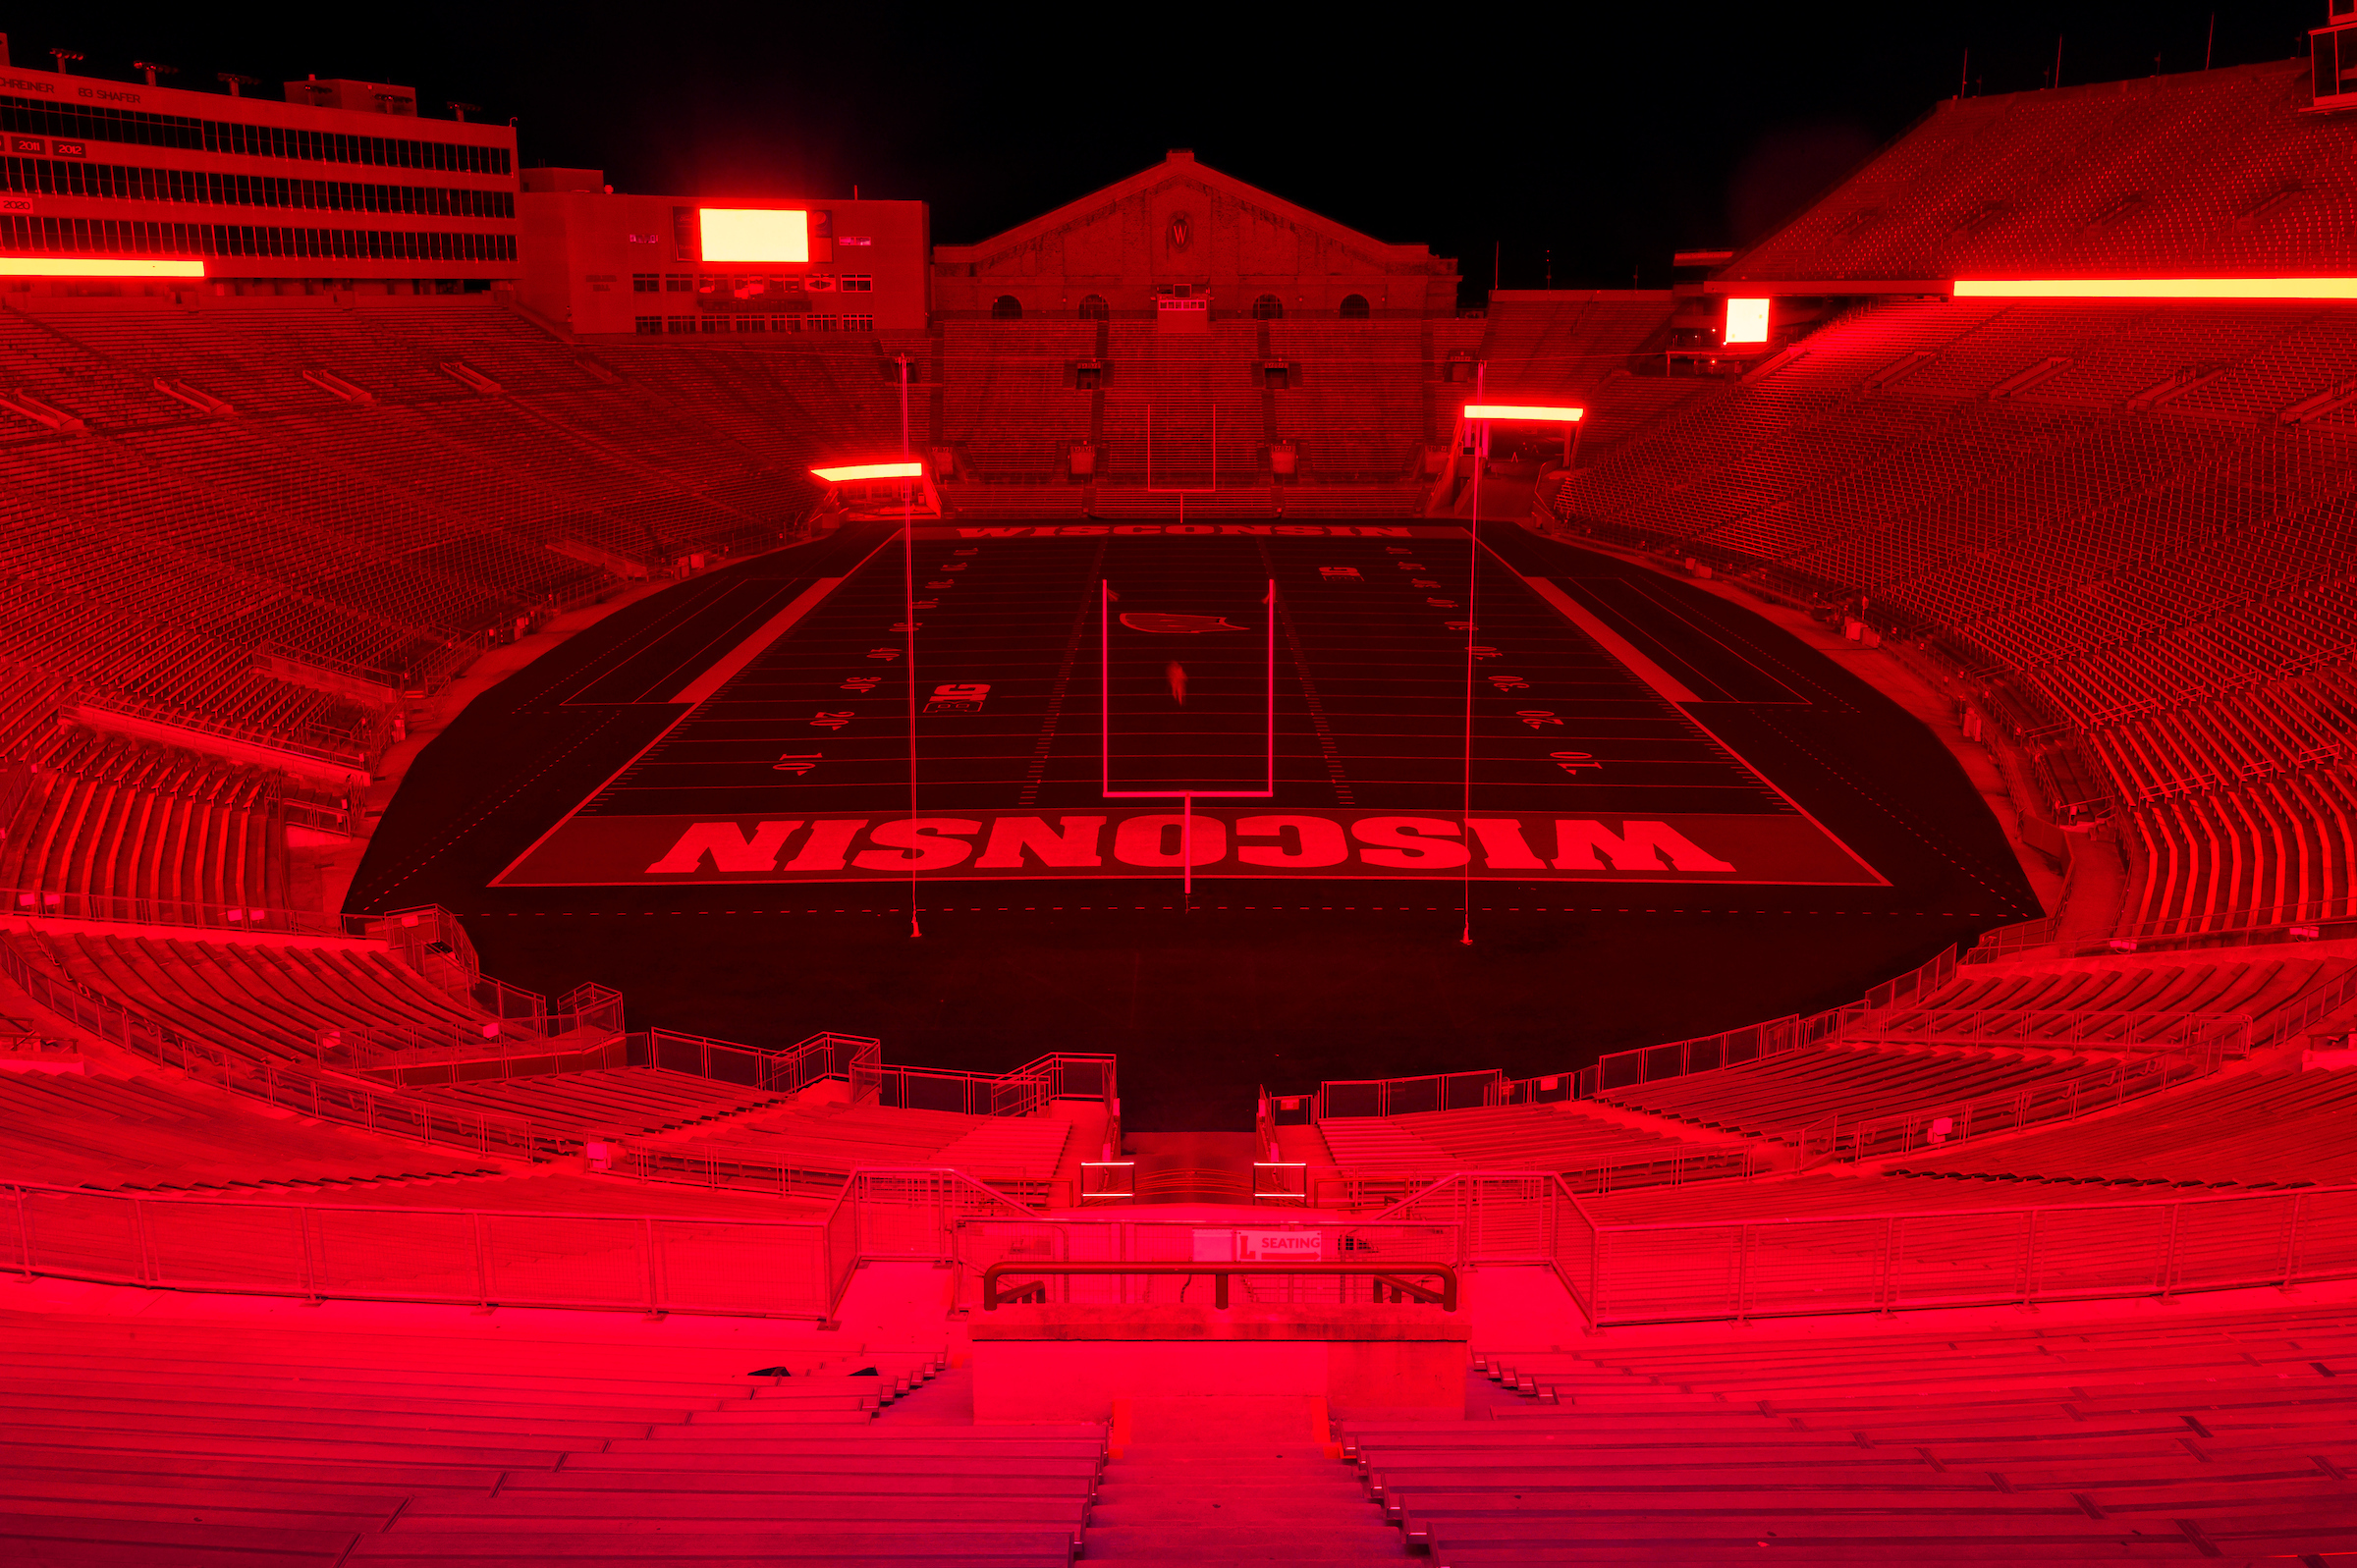 UW-Madison's Camp Randall stadium illuminated in red to honor class of 2020